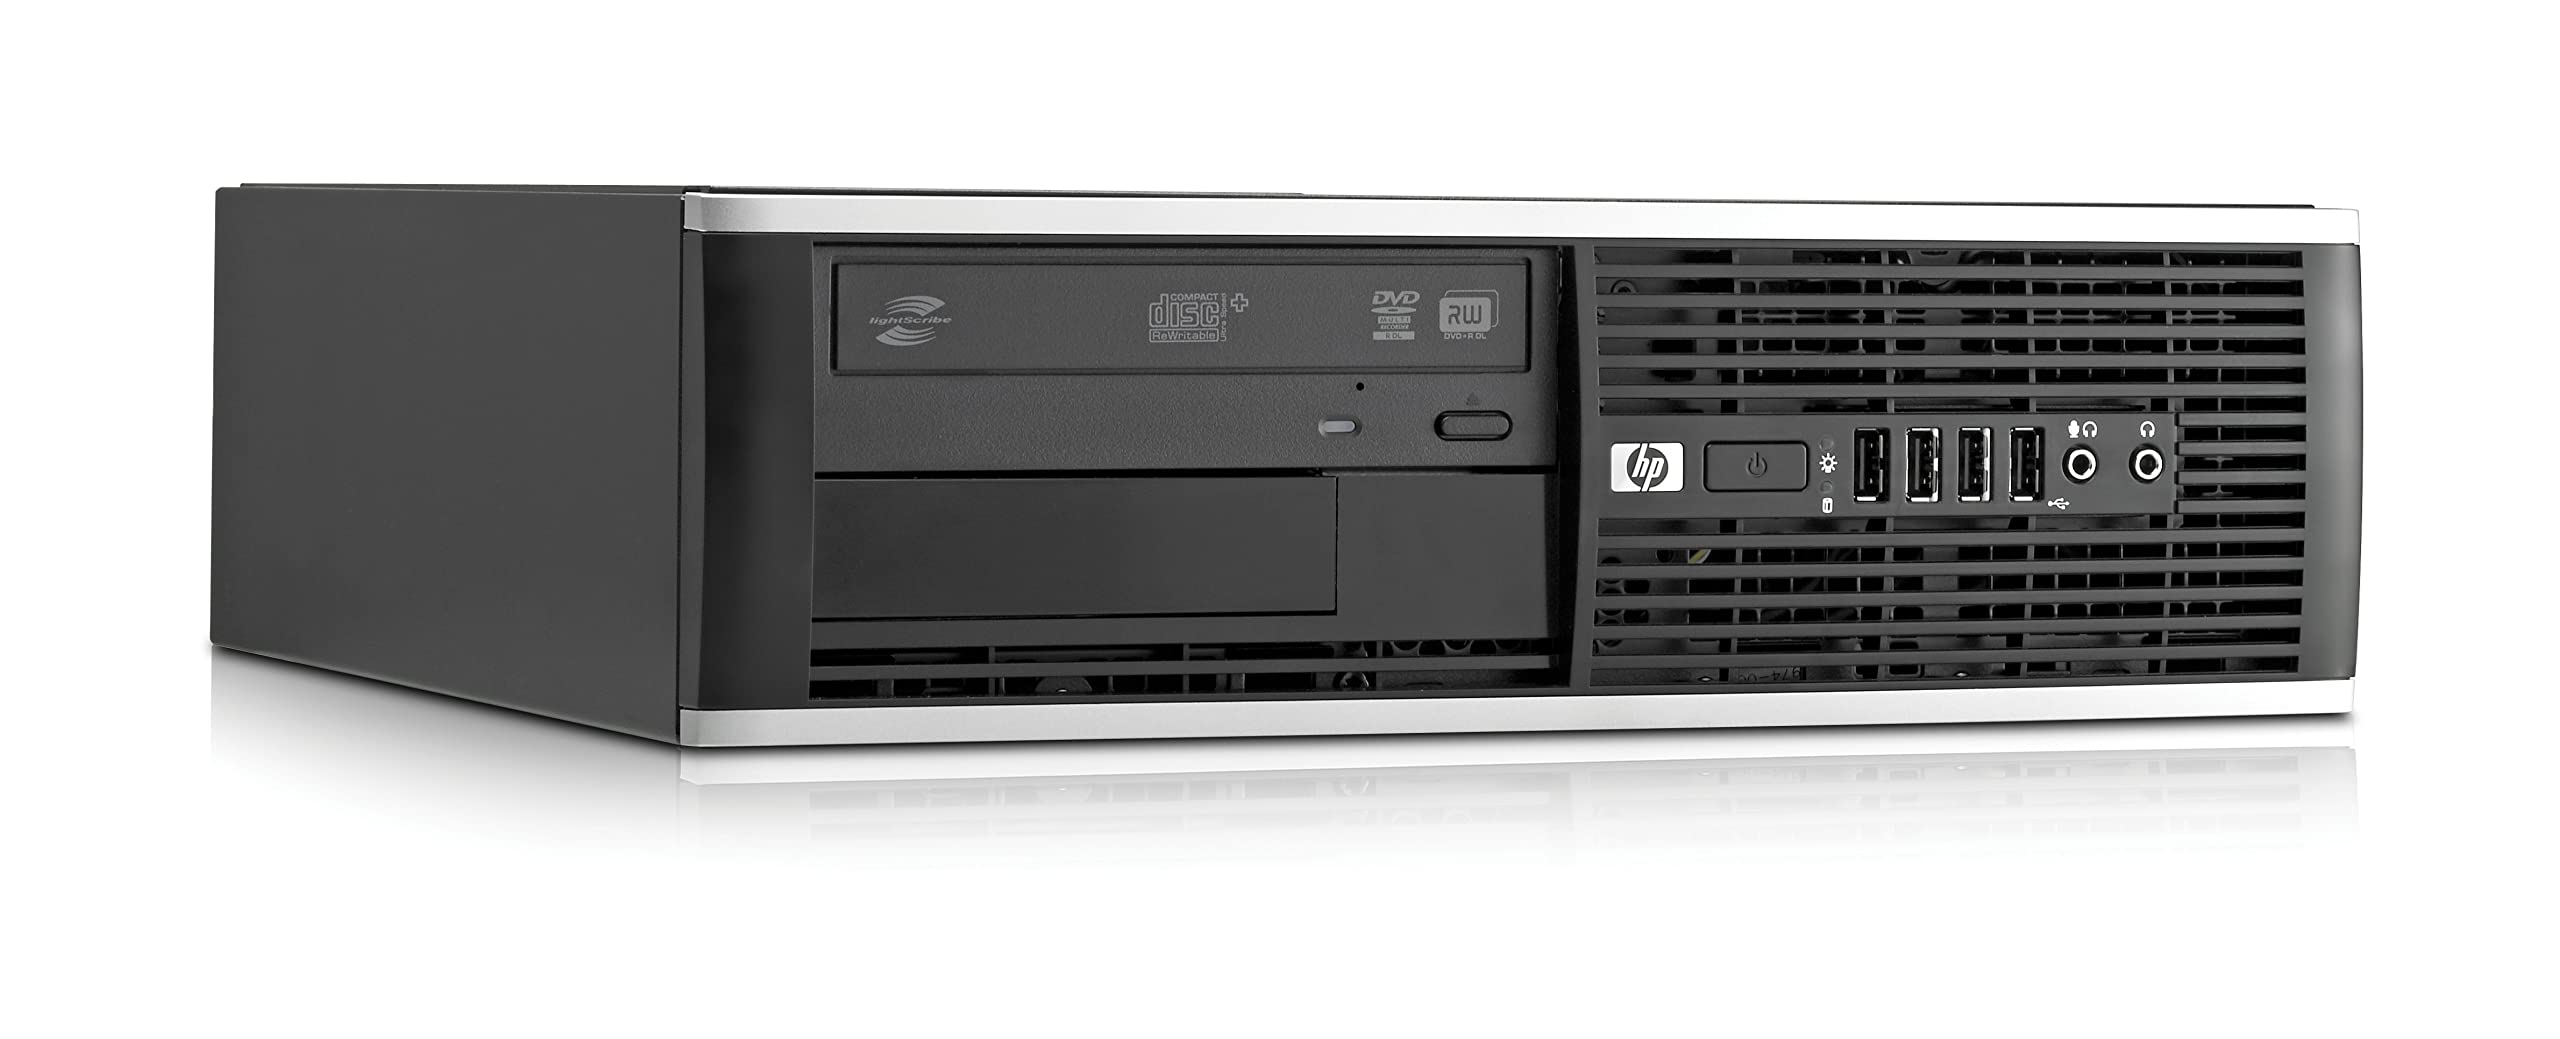 Compaq 6005 Pro Ultra-slim Desktop PC